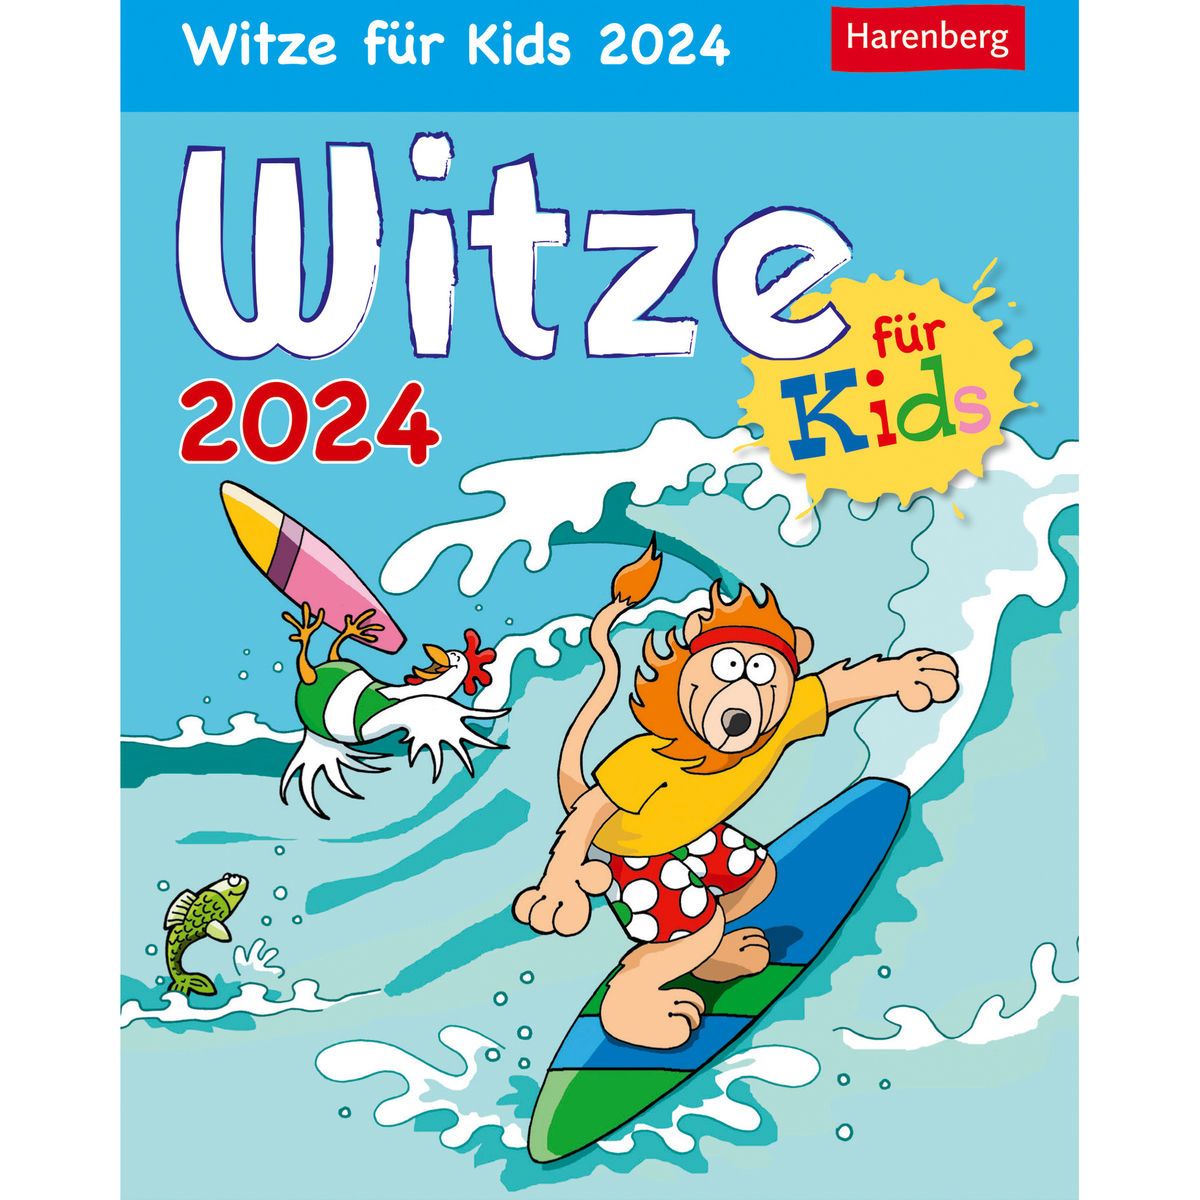 Calendario a strappo Harenberg Scherzi per bambini, IT, 2024